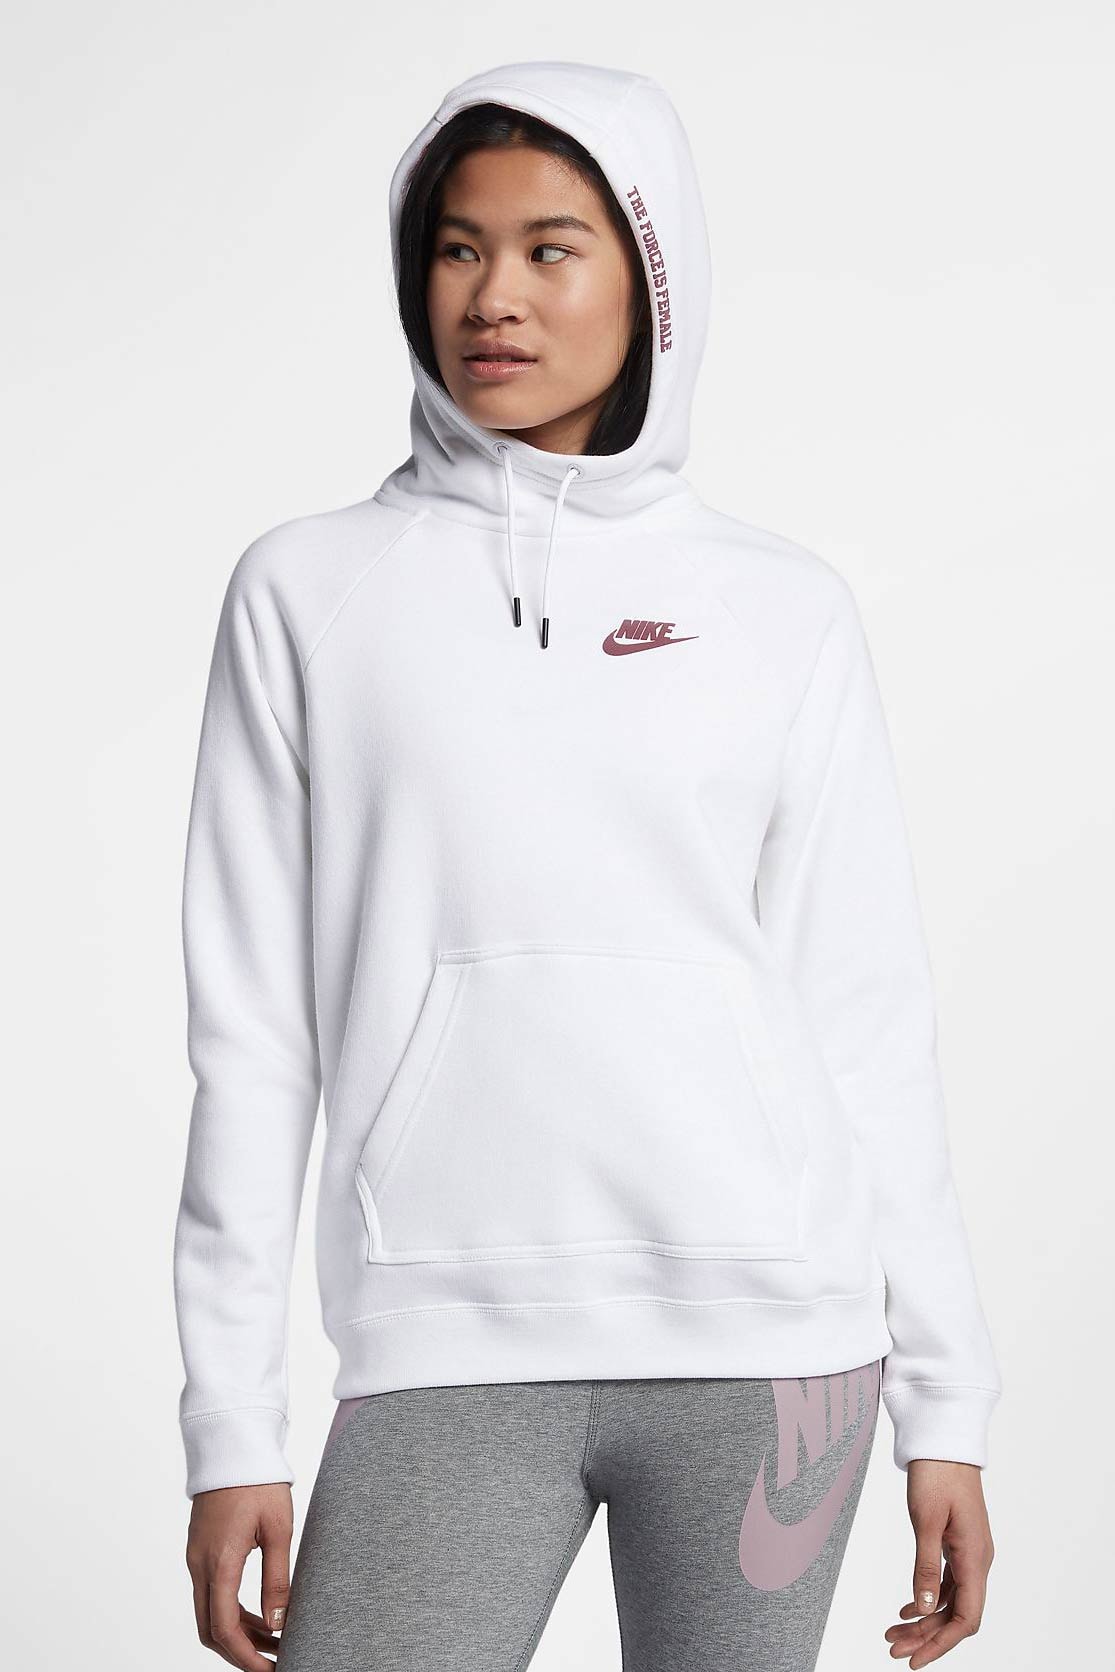 Nike's Force Is Female Hoodie Is a Statement | Hypebae